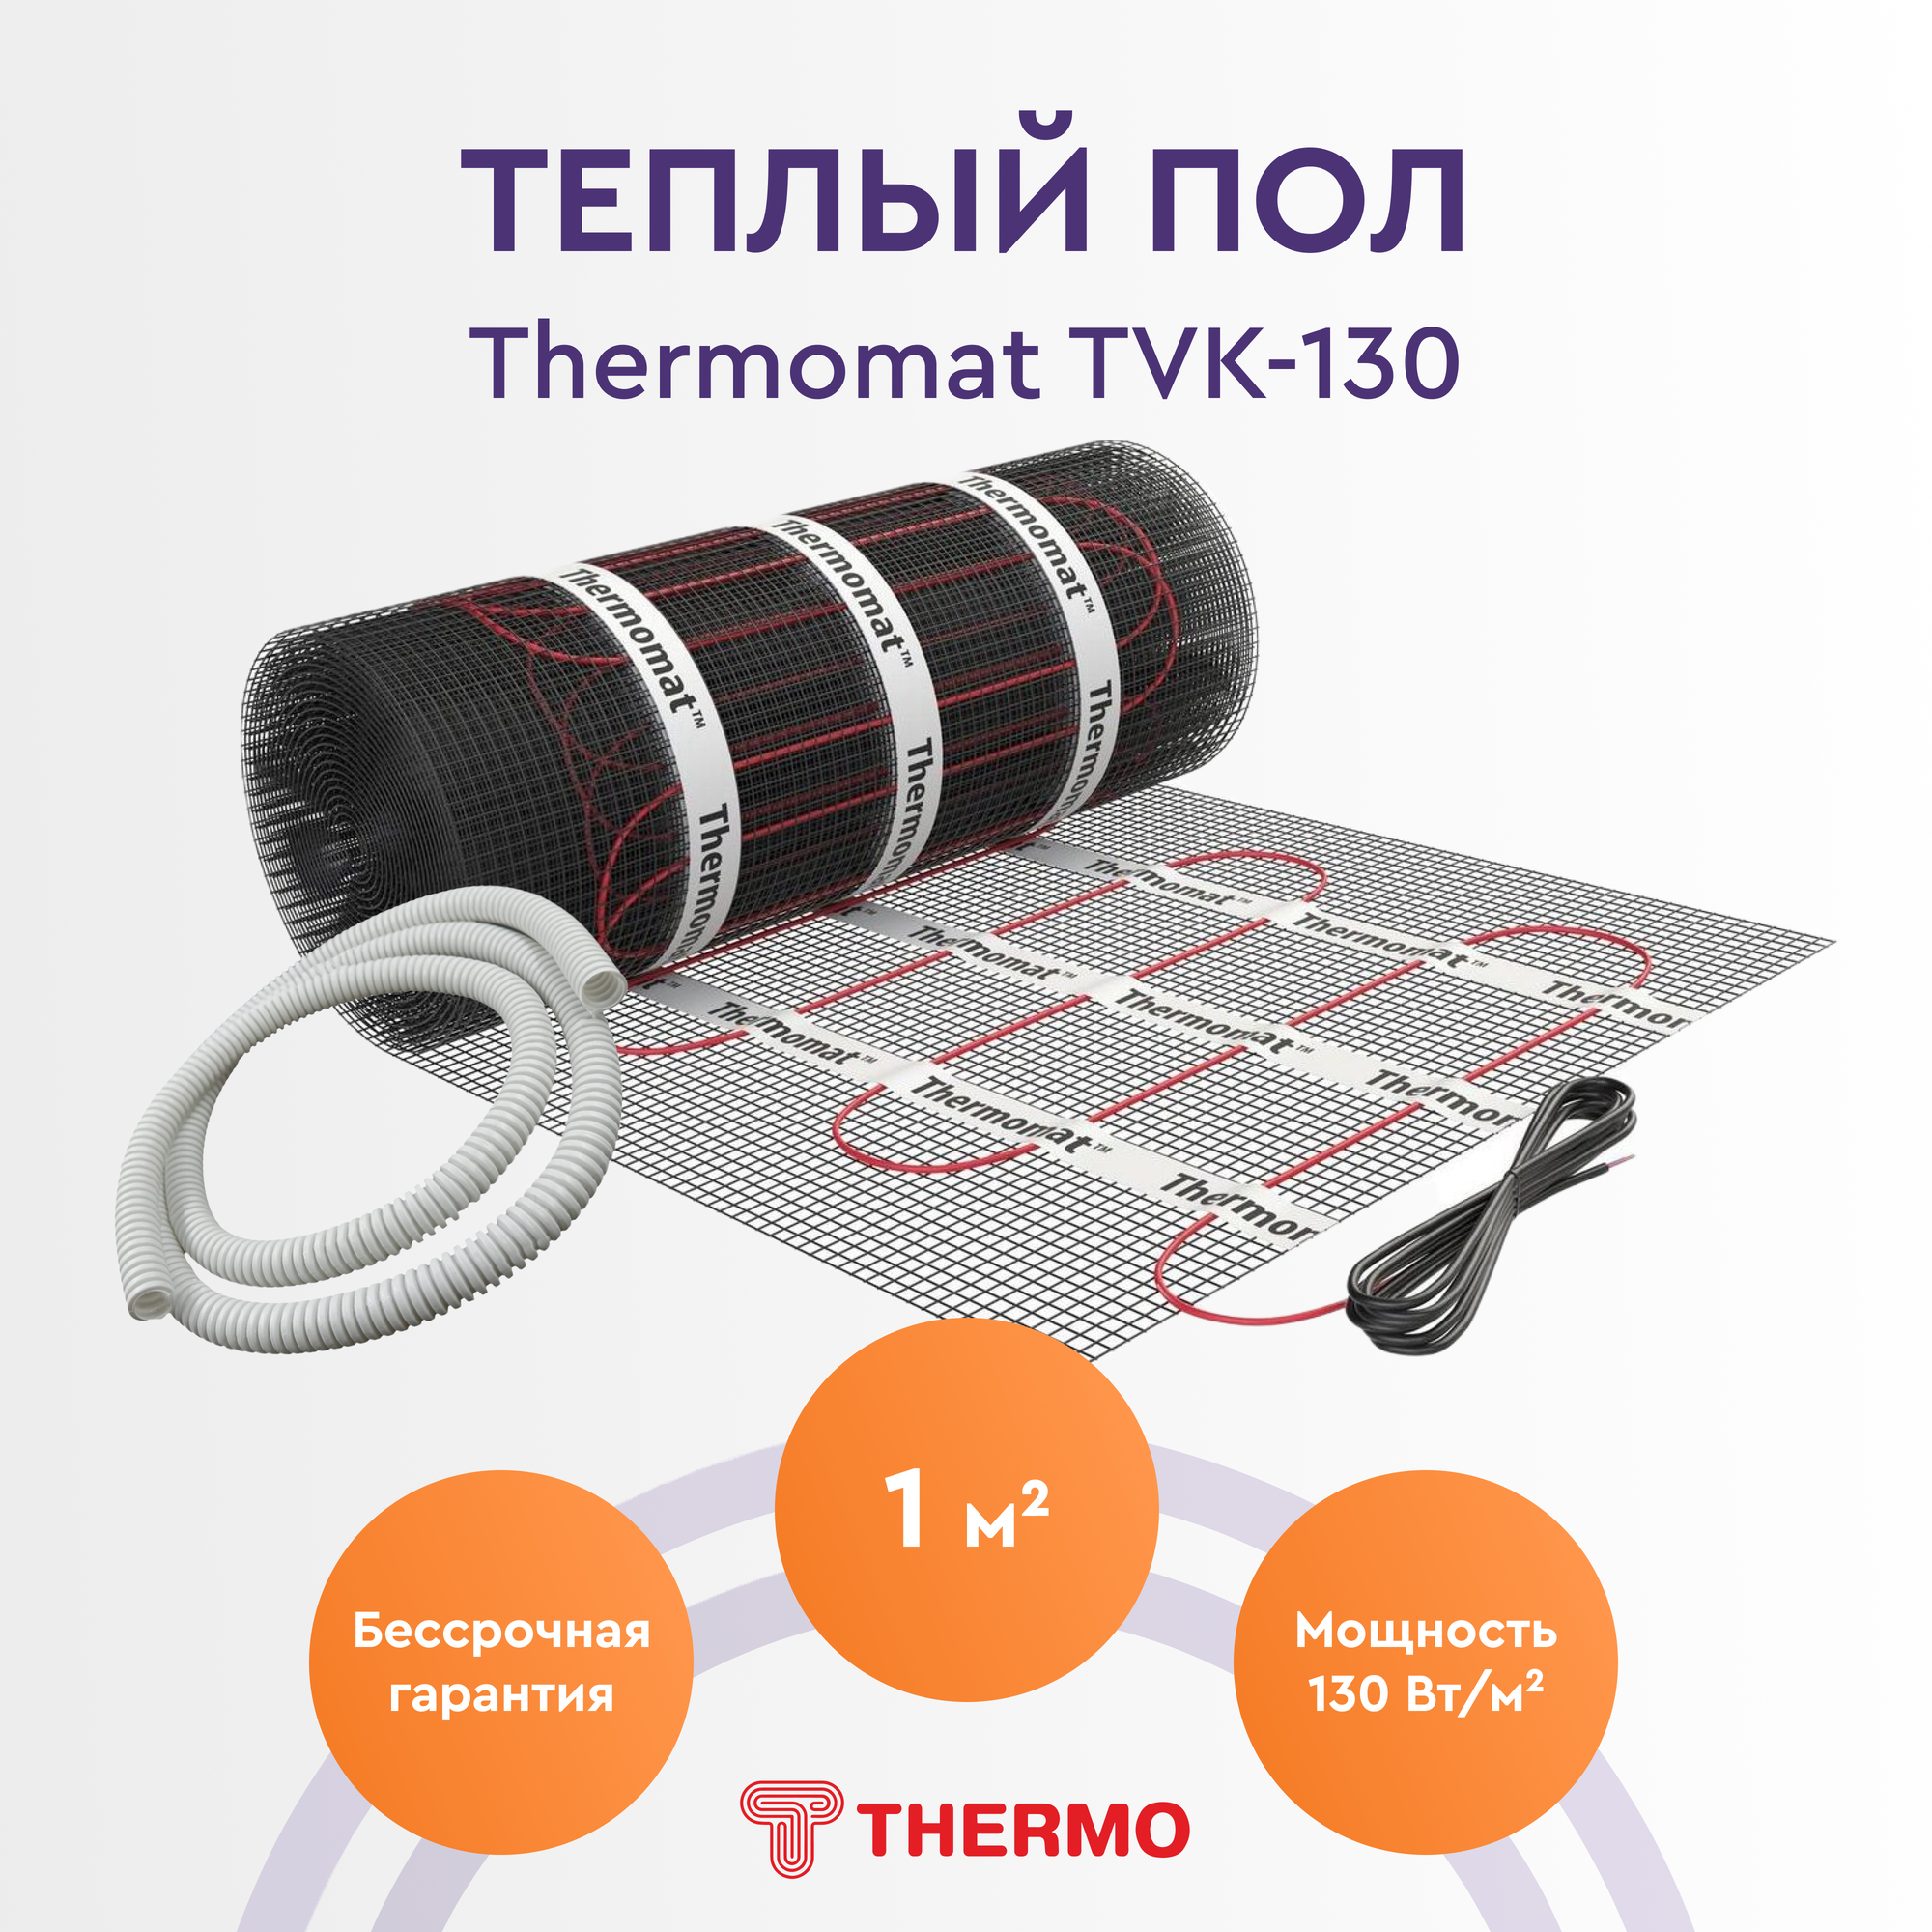 Теплый пол Thermo Thermomat TVK-130 1м. кв.